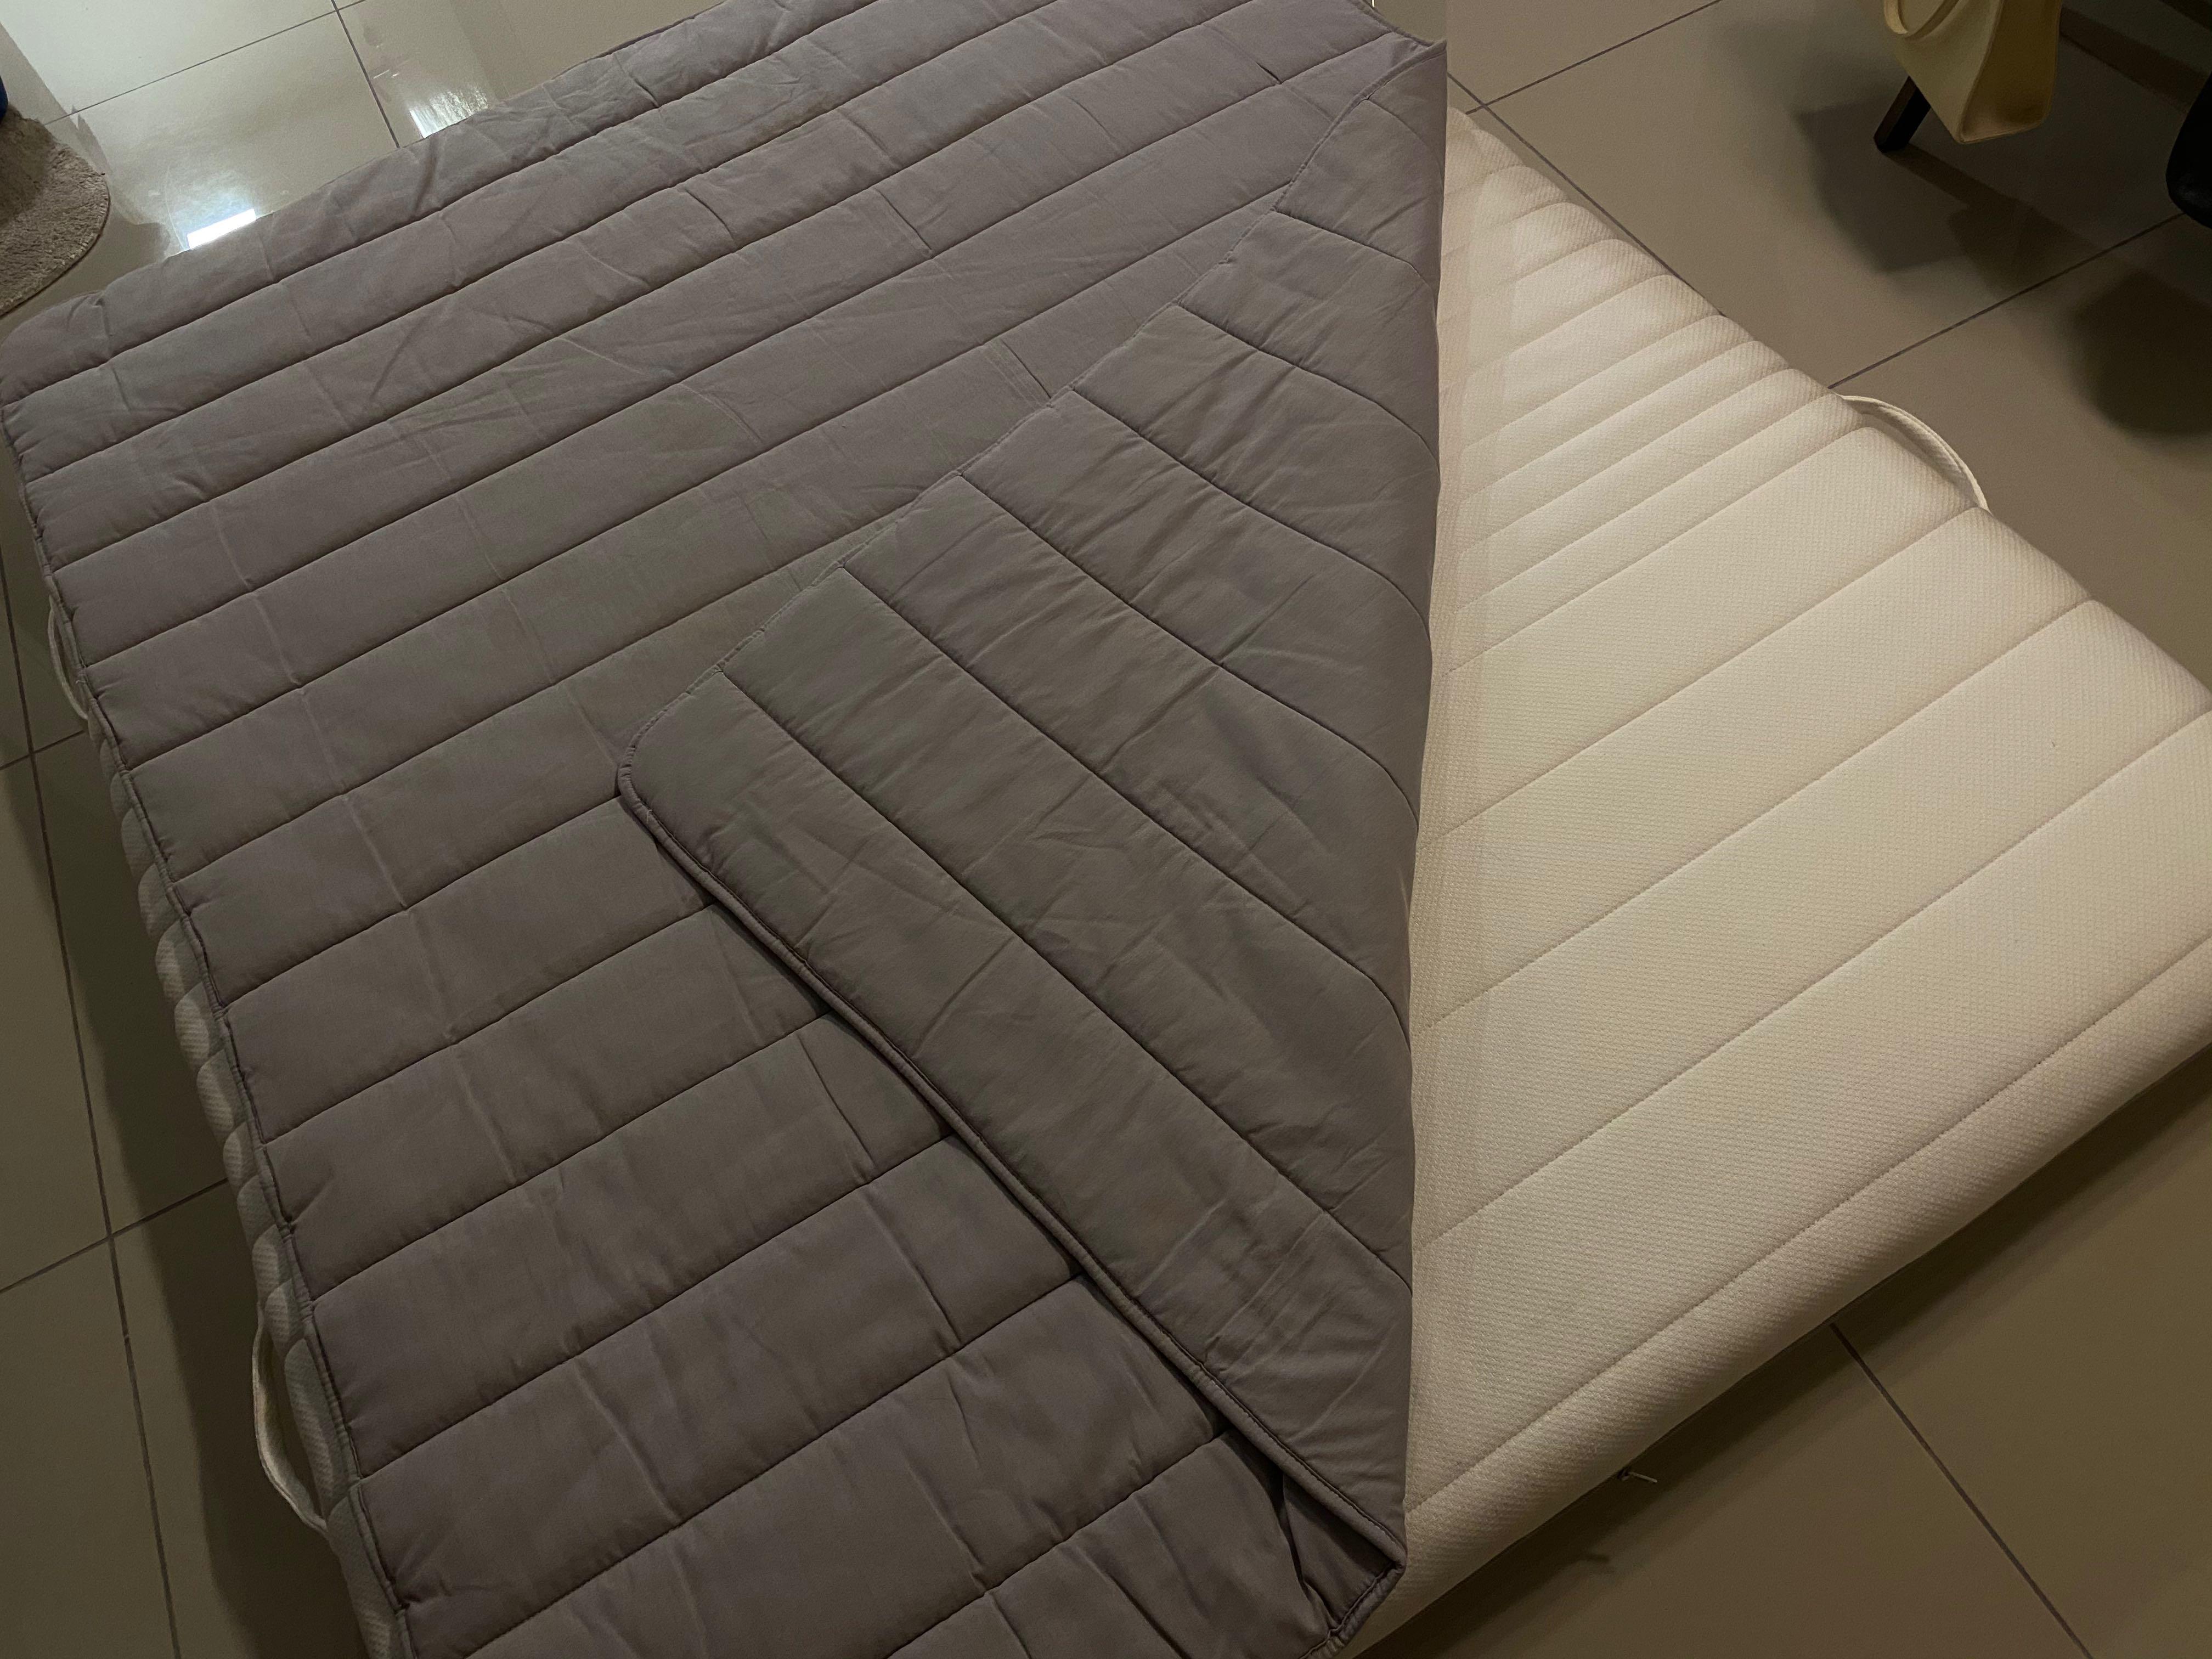 sultan favang mattress cover